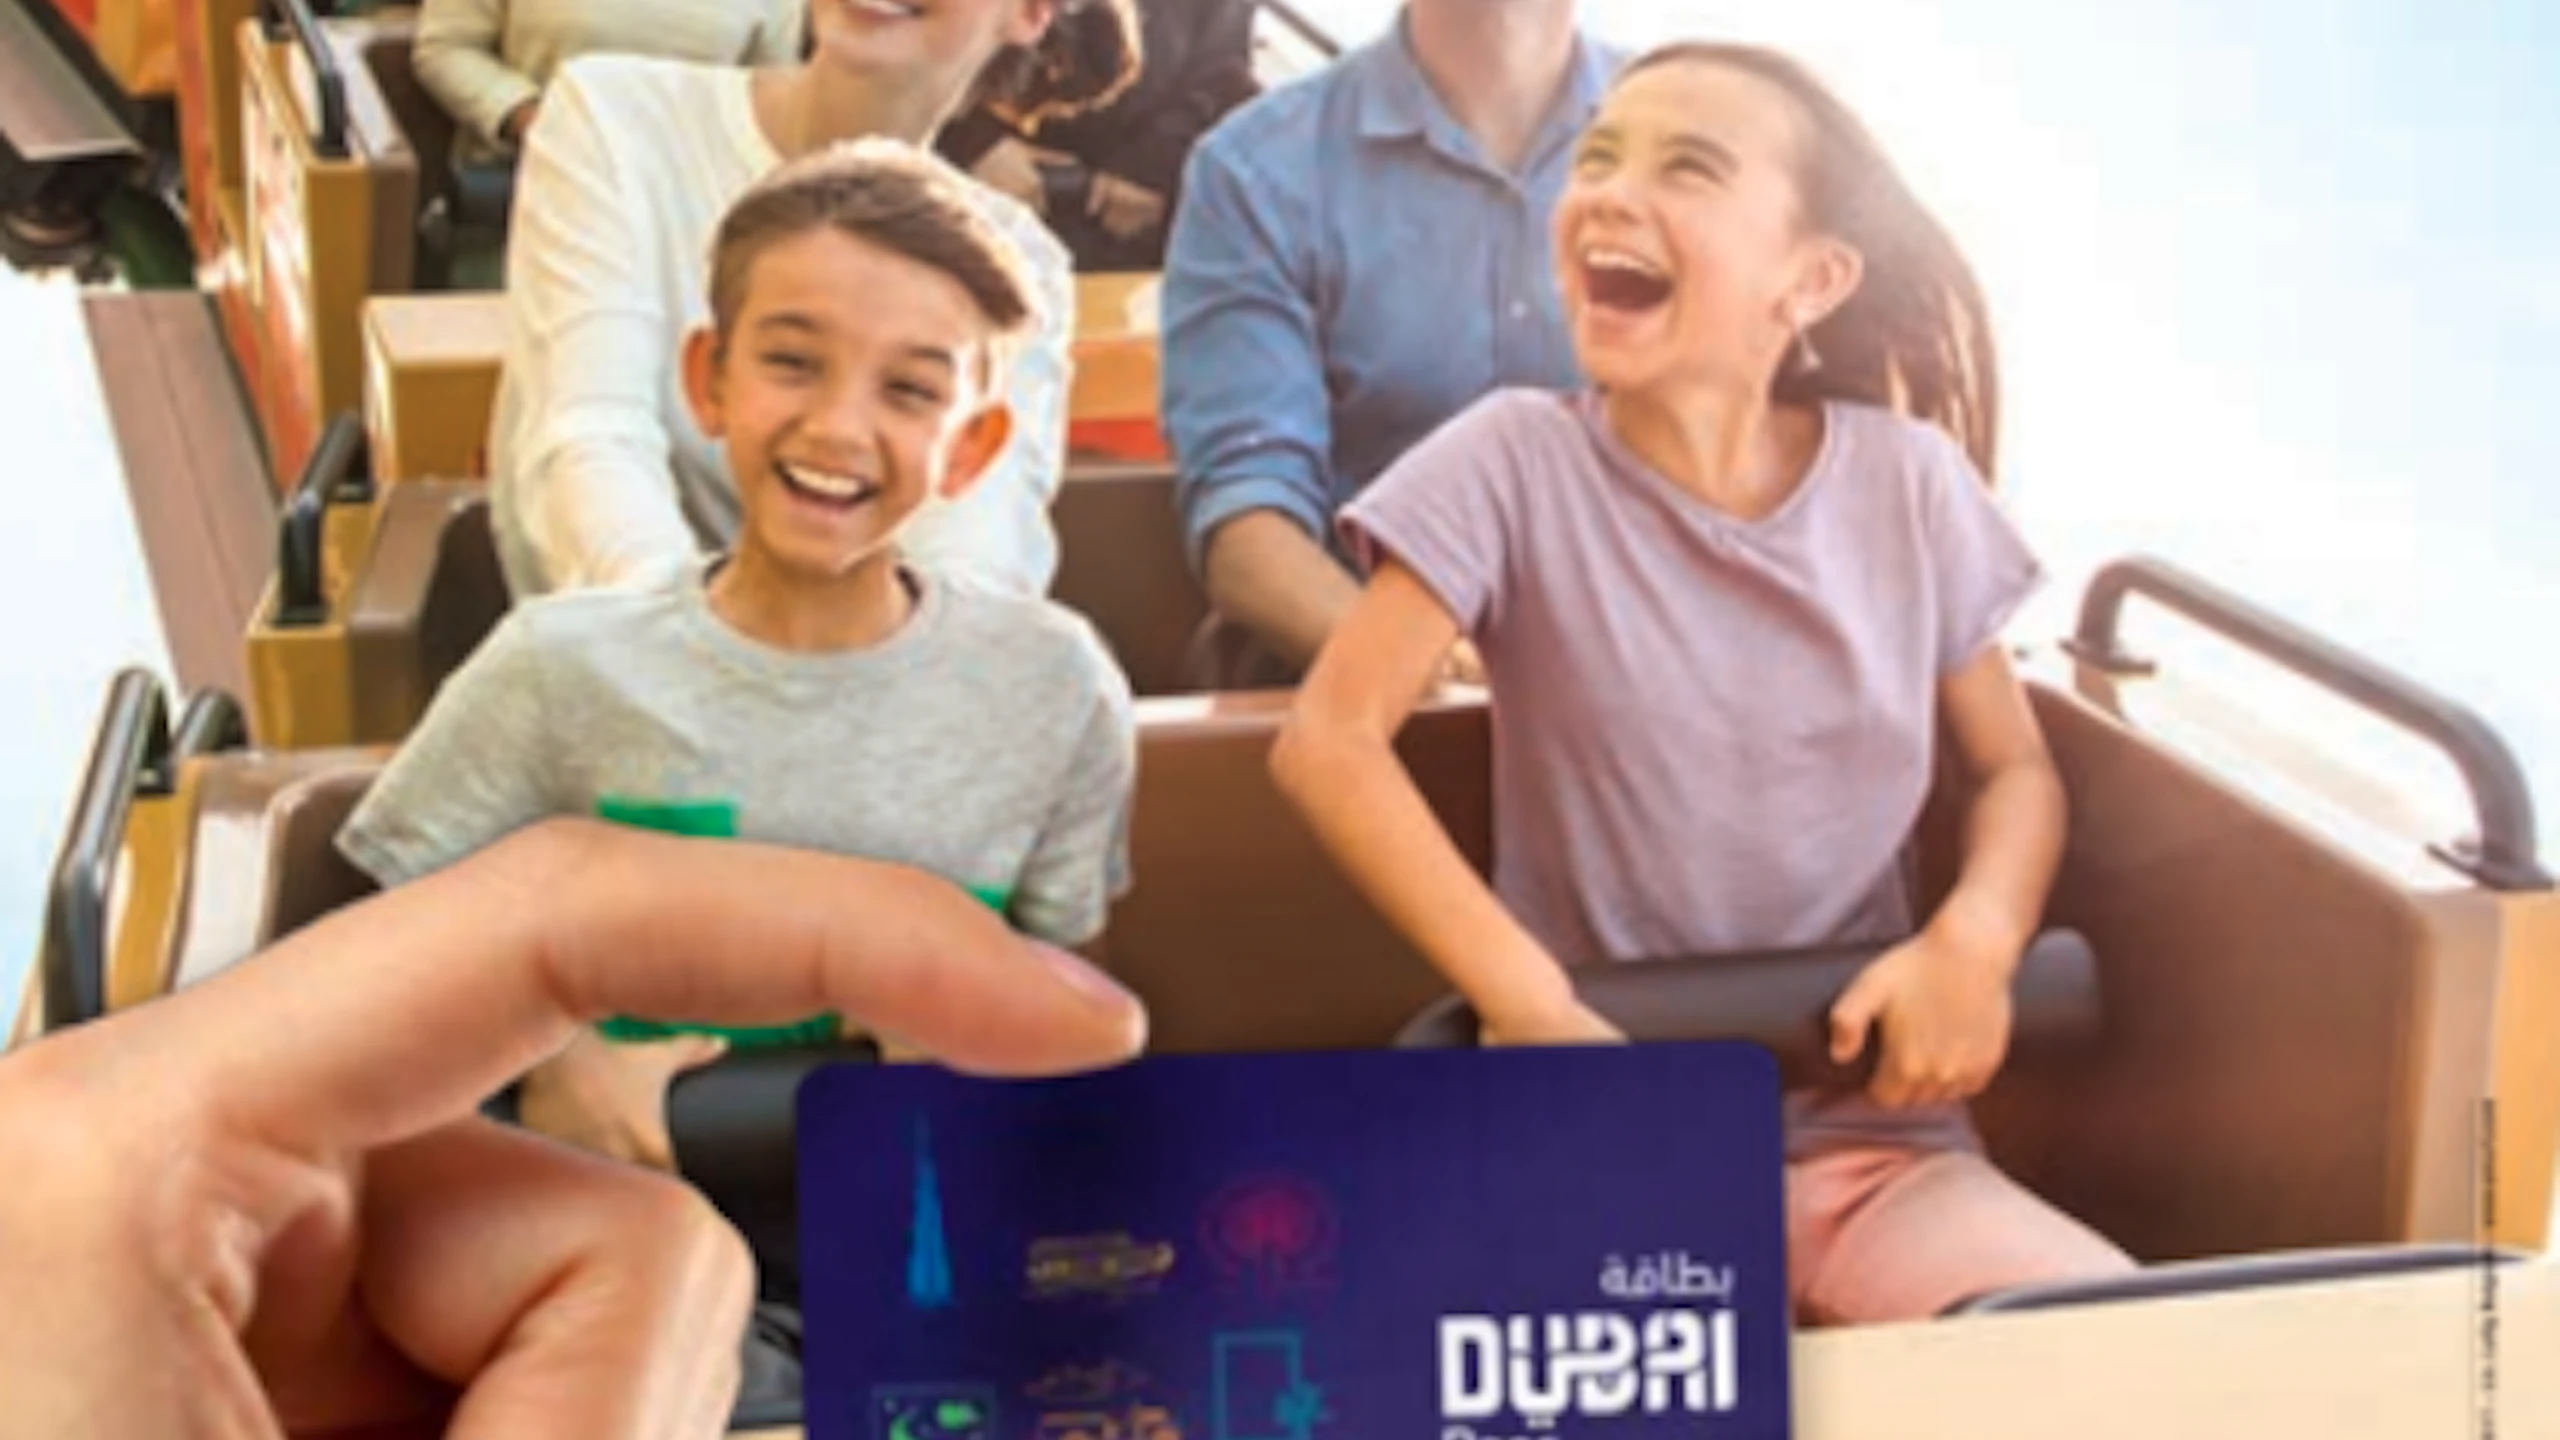 iVenture Dubai Select Attractions Pass